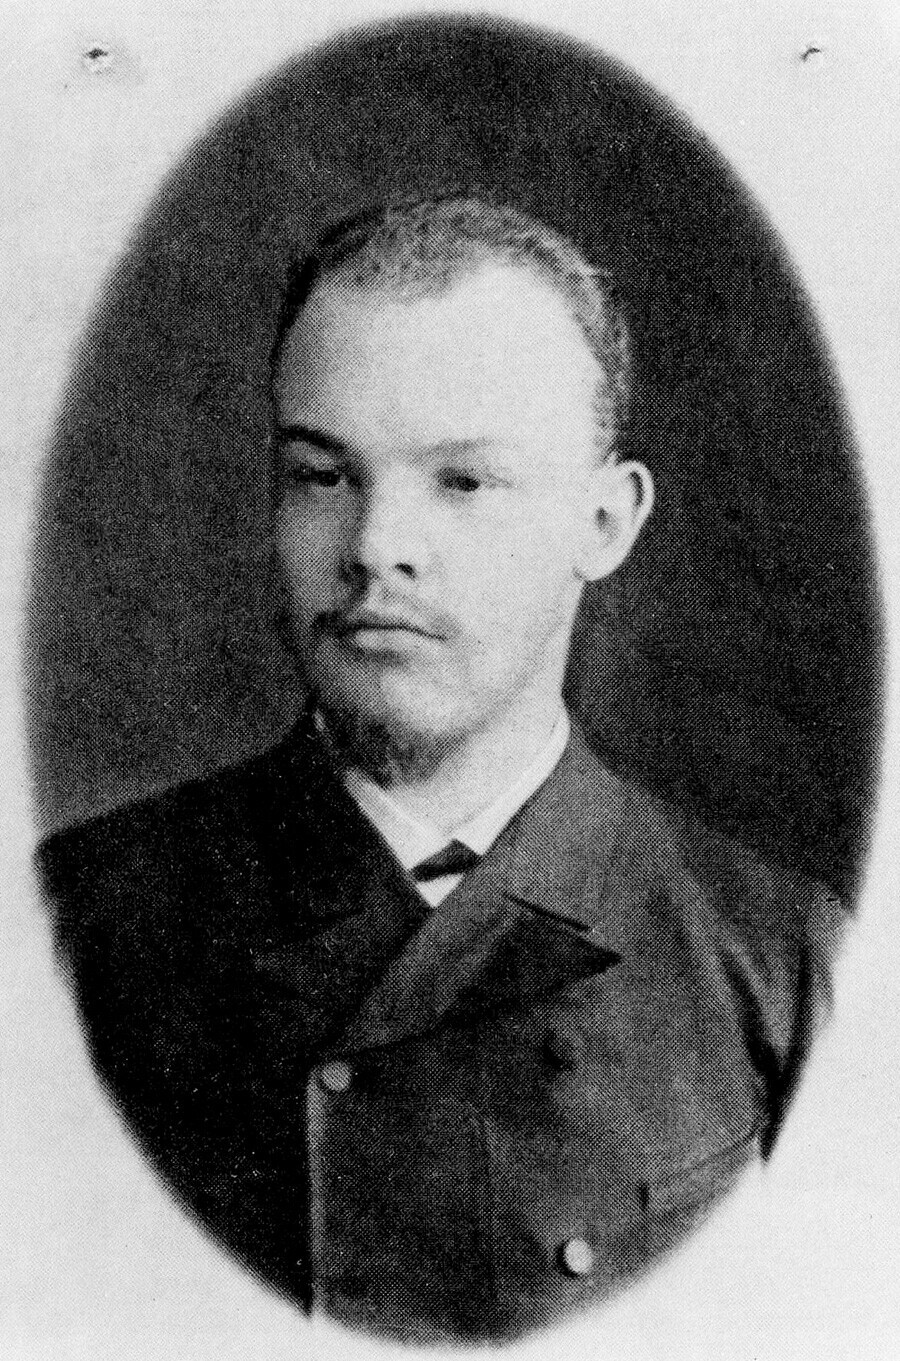 Студентот Владимир Уљјанов (Ленин), околу 1891 година